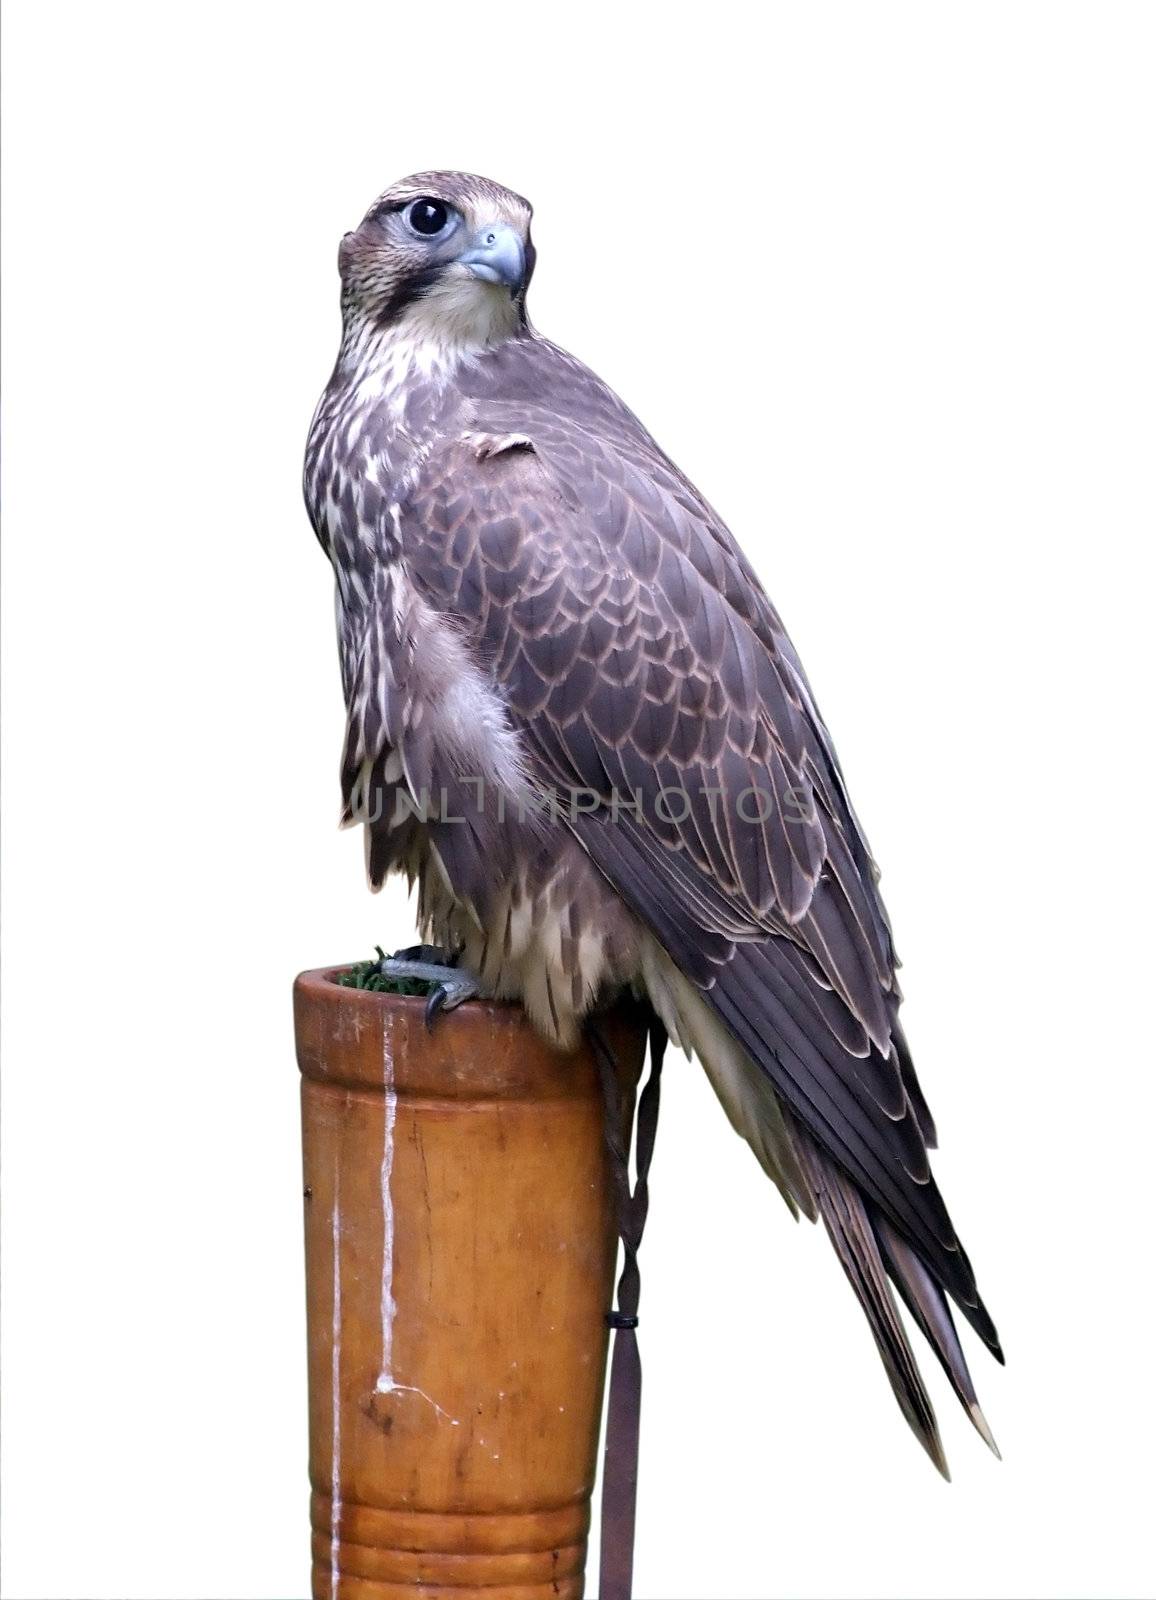 Isolated gray eagle or in latin Harpyhaliaetus coronatus